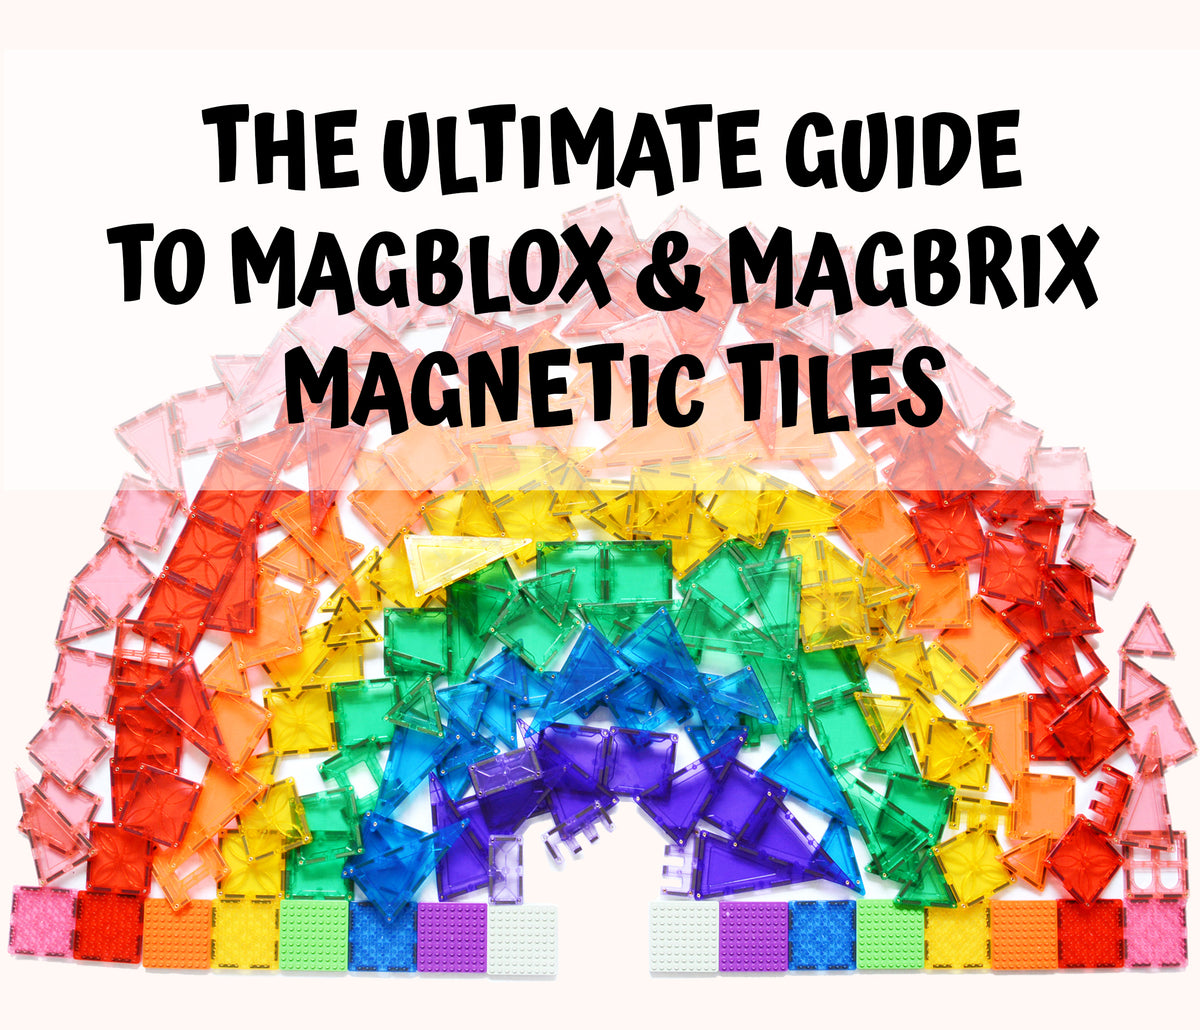 Mag-Genius Magnet Tiles 6 x 6 Building Magnetic Plate Set of 3 Colors Stem